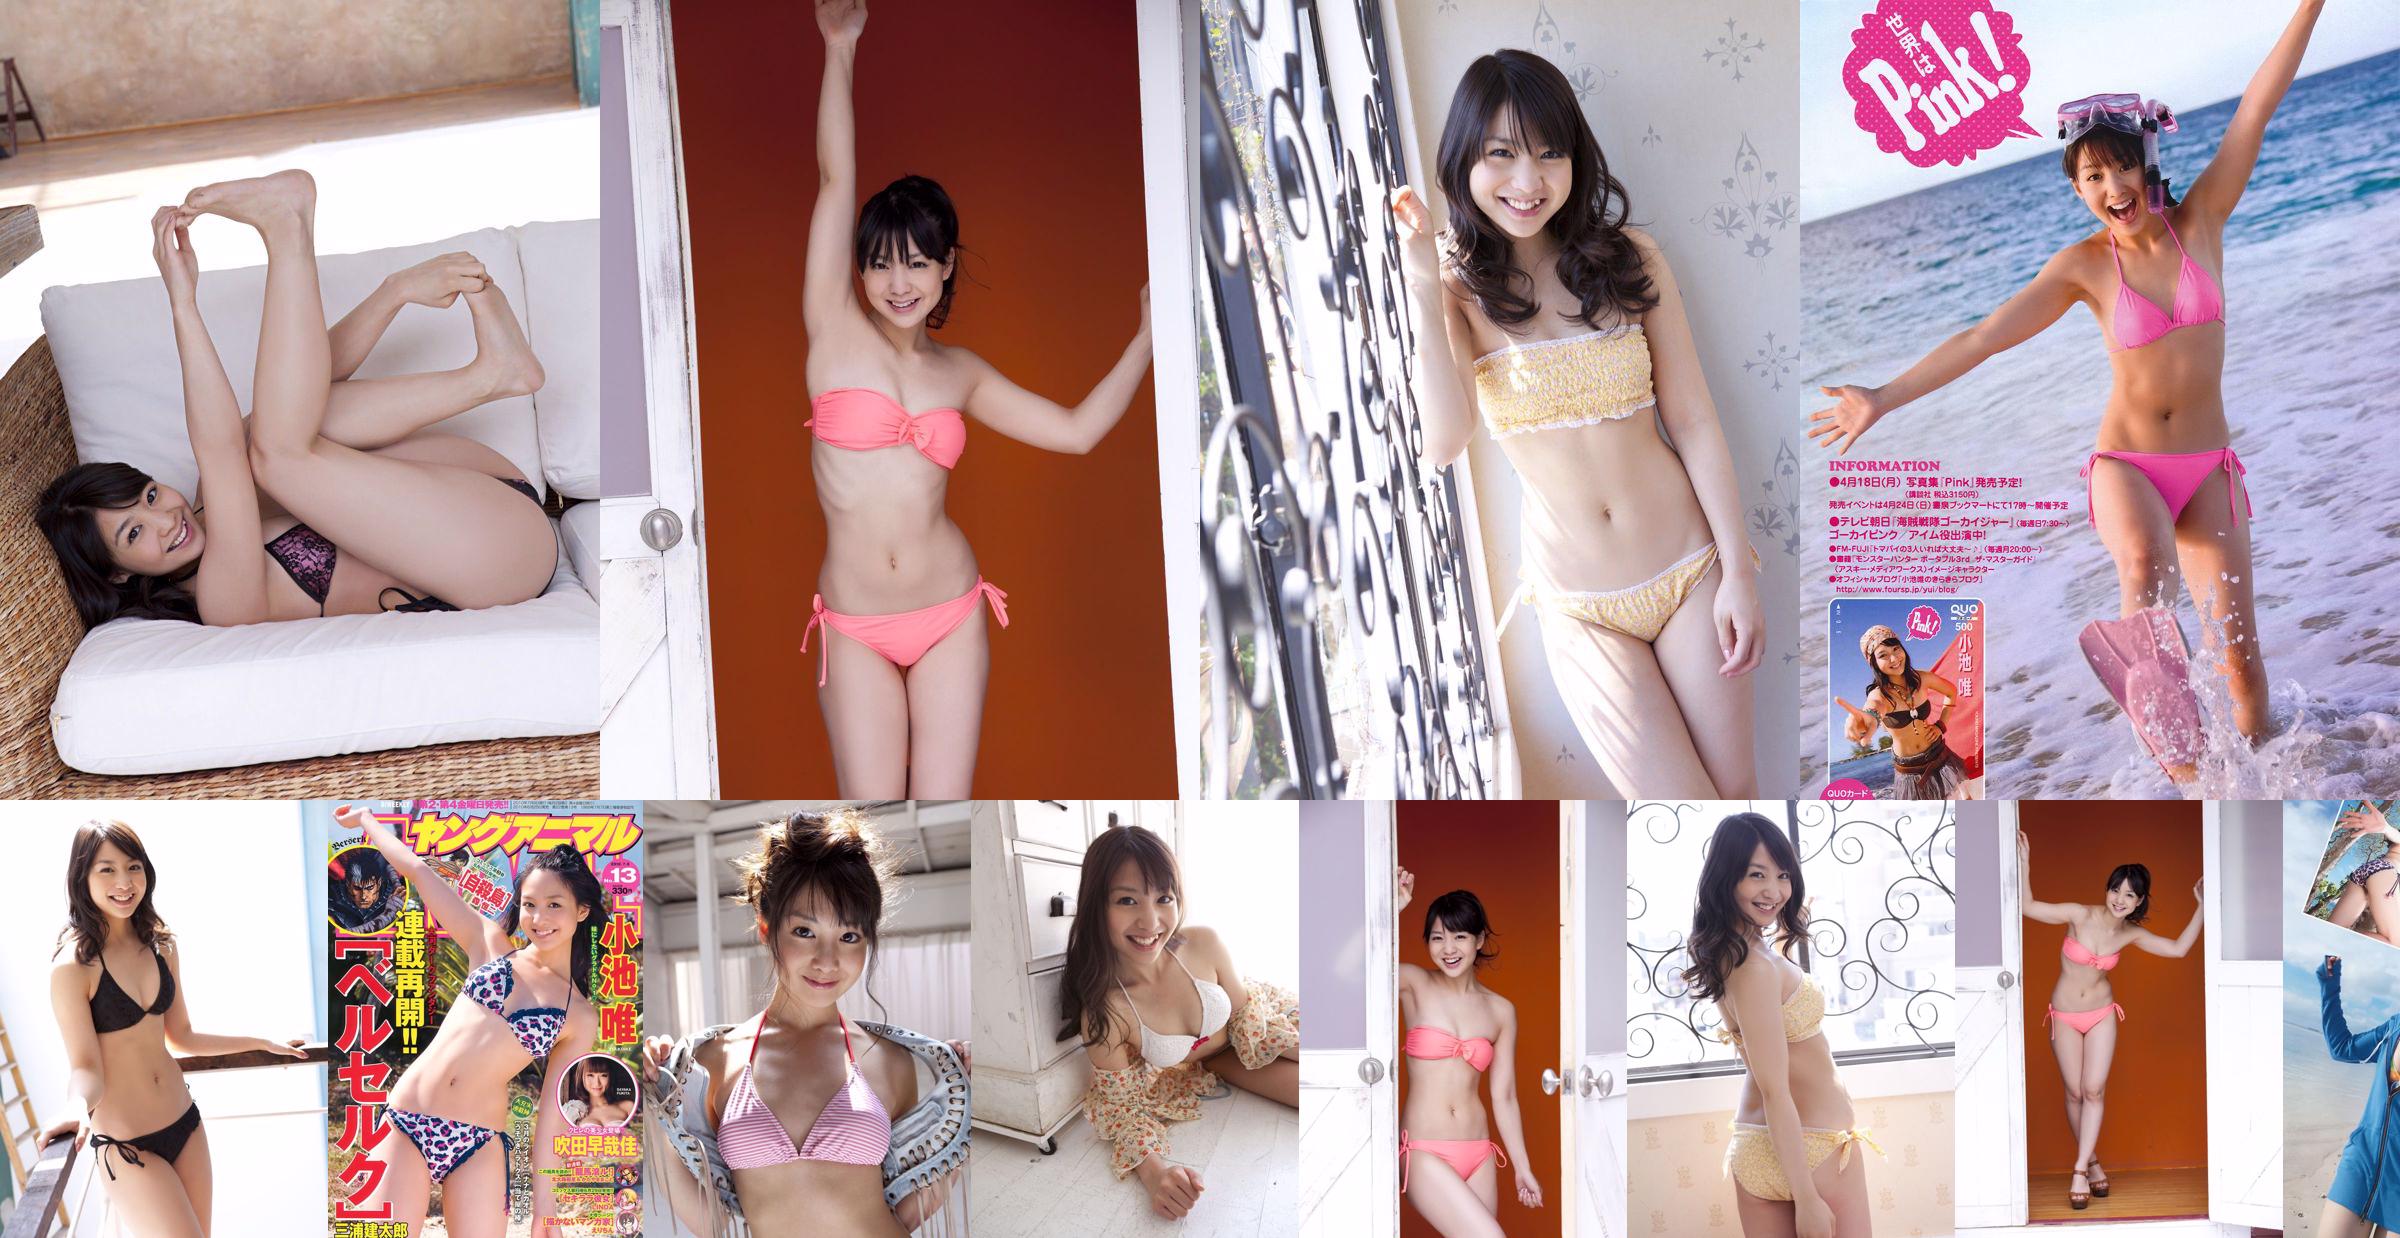 Yui Koike "FOREVER 21" [Sabra.net] Cover Girl No.6a386c Pagina 20